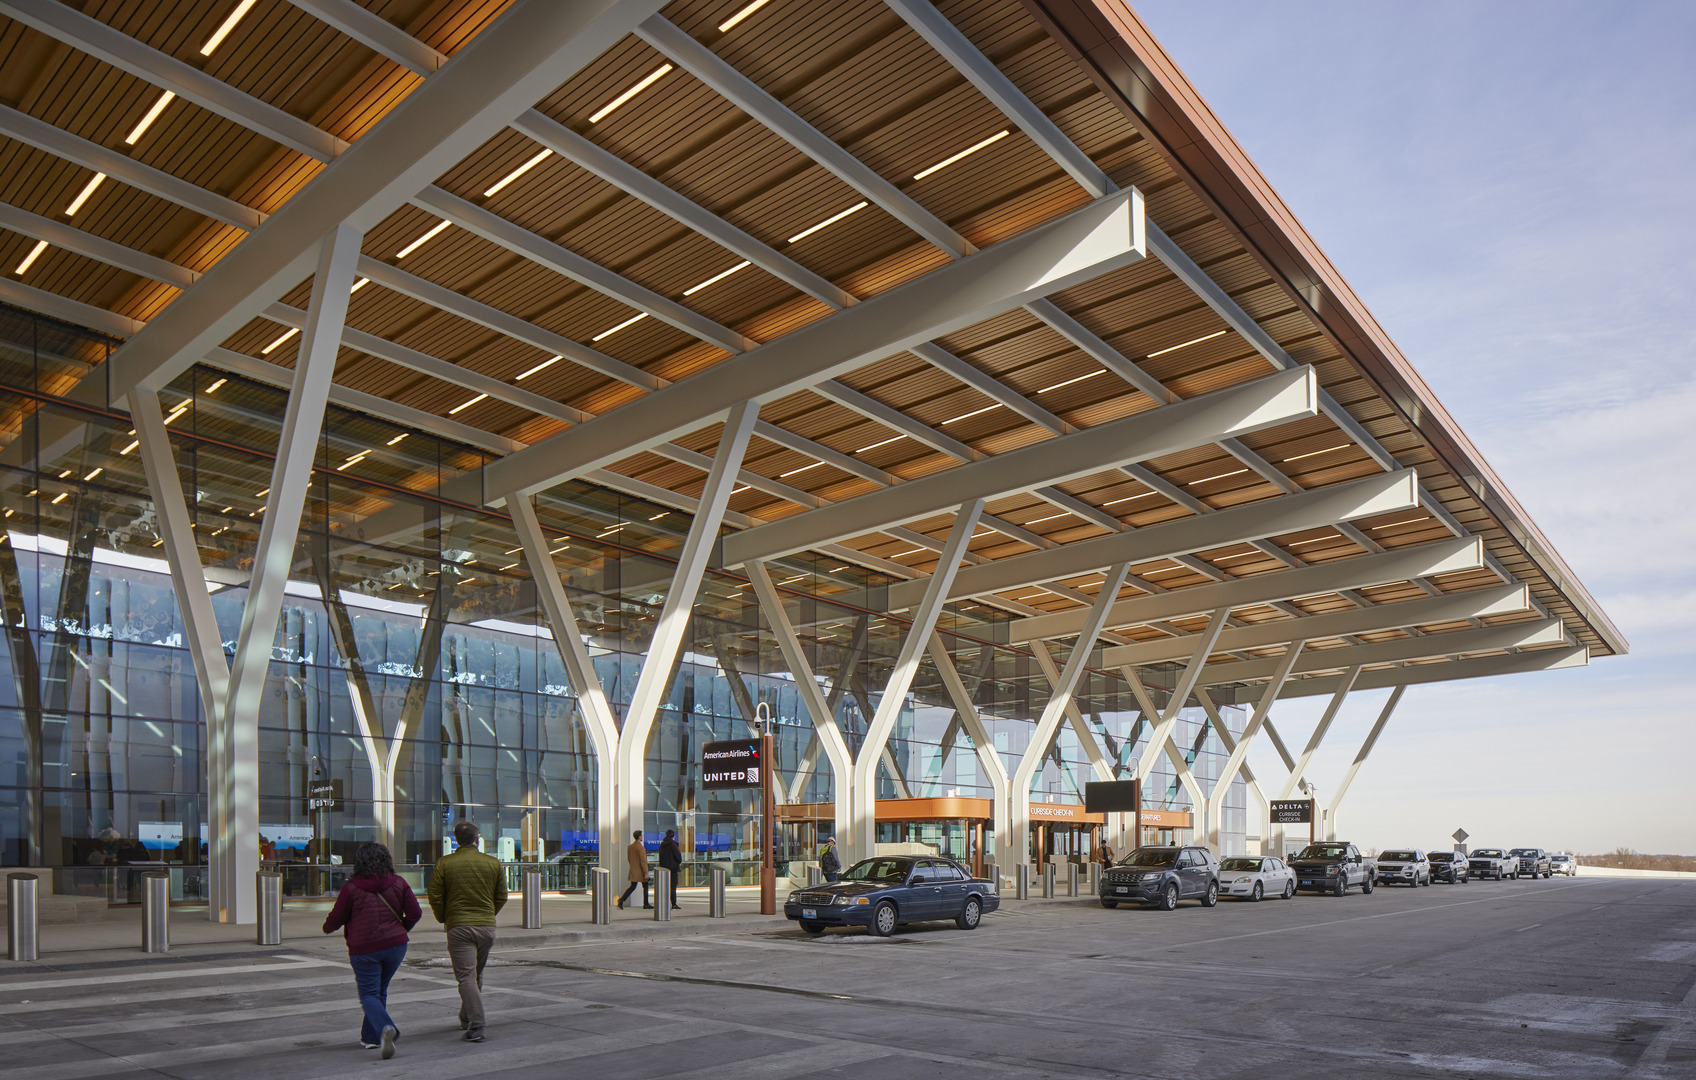 Kansas City International Airport (MCI) New Single Terminal